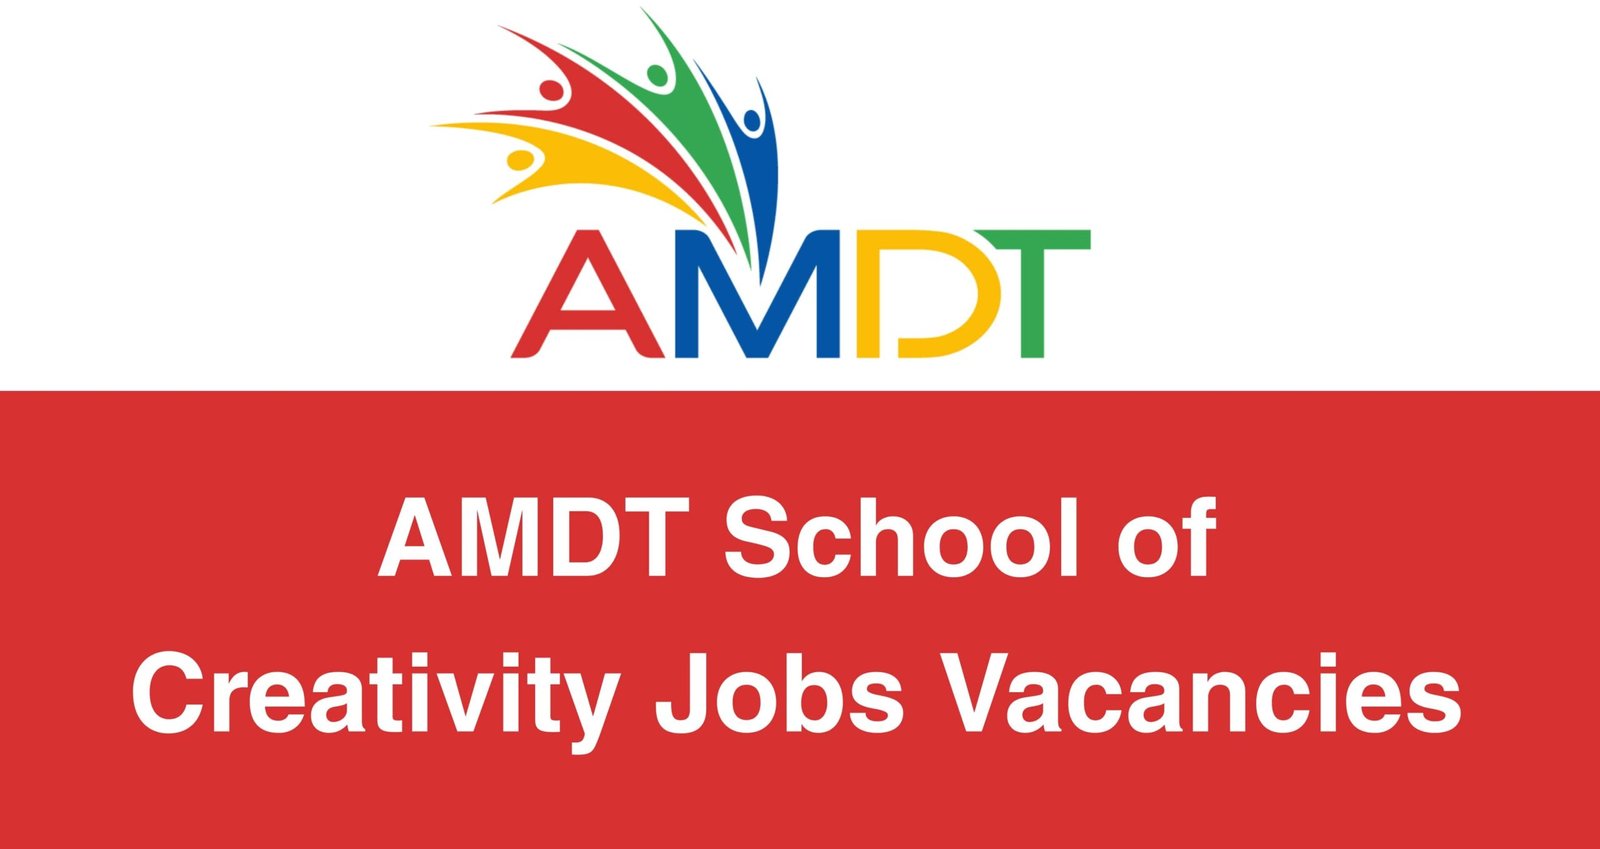 AMDT School of Creativity Jobs Vacancies